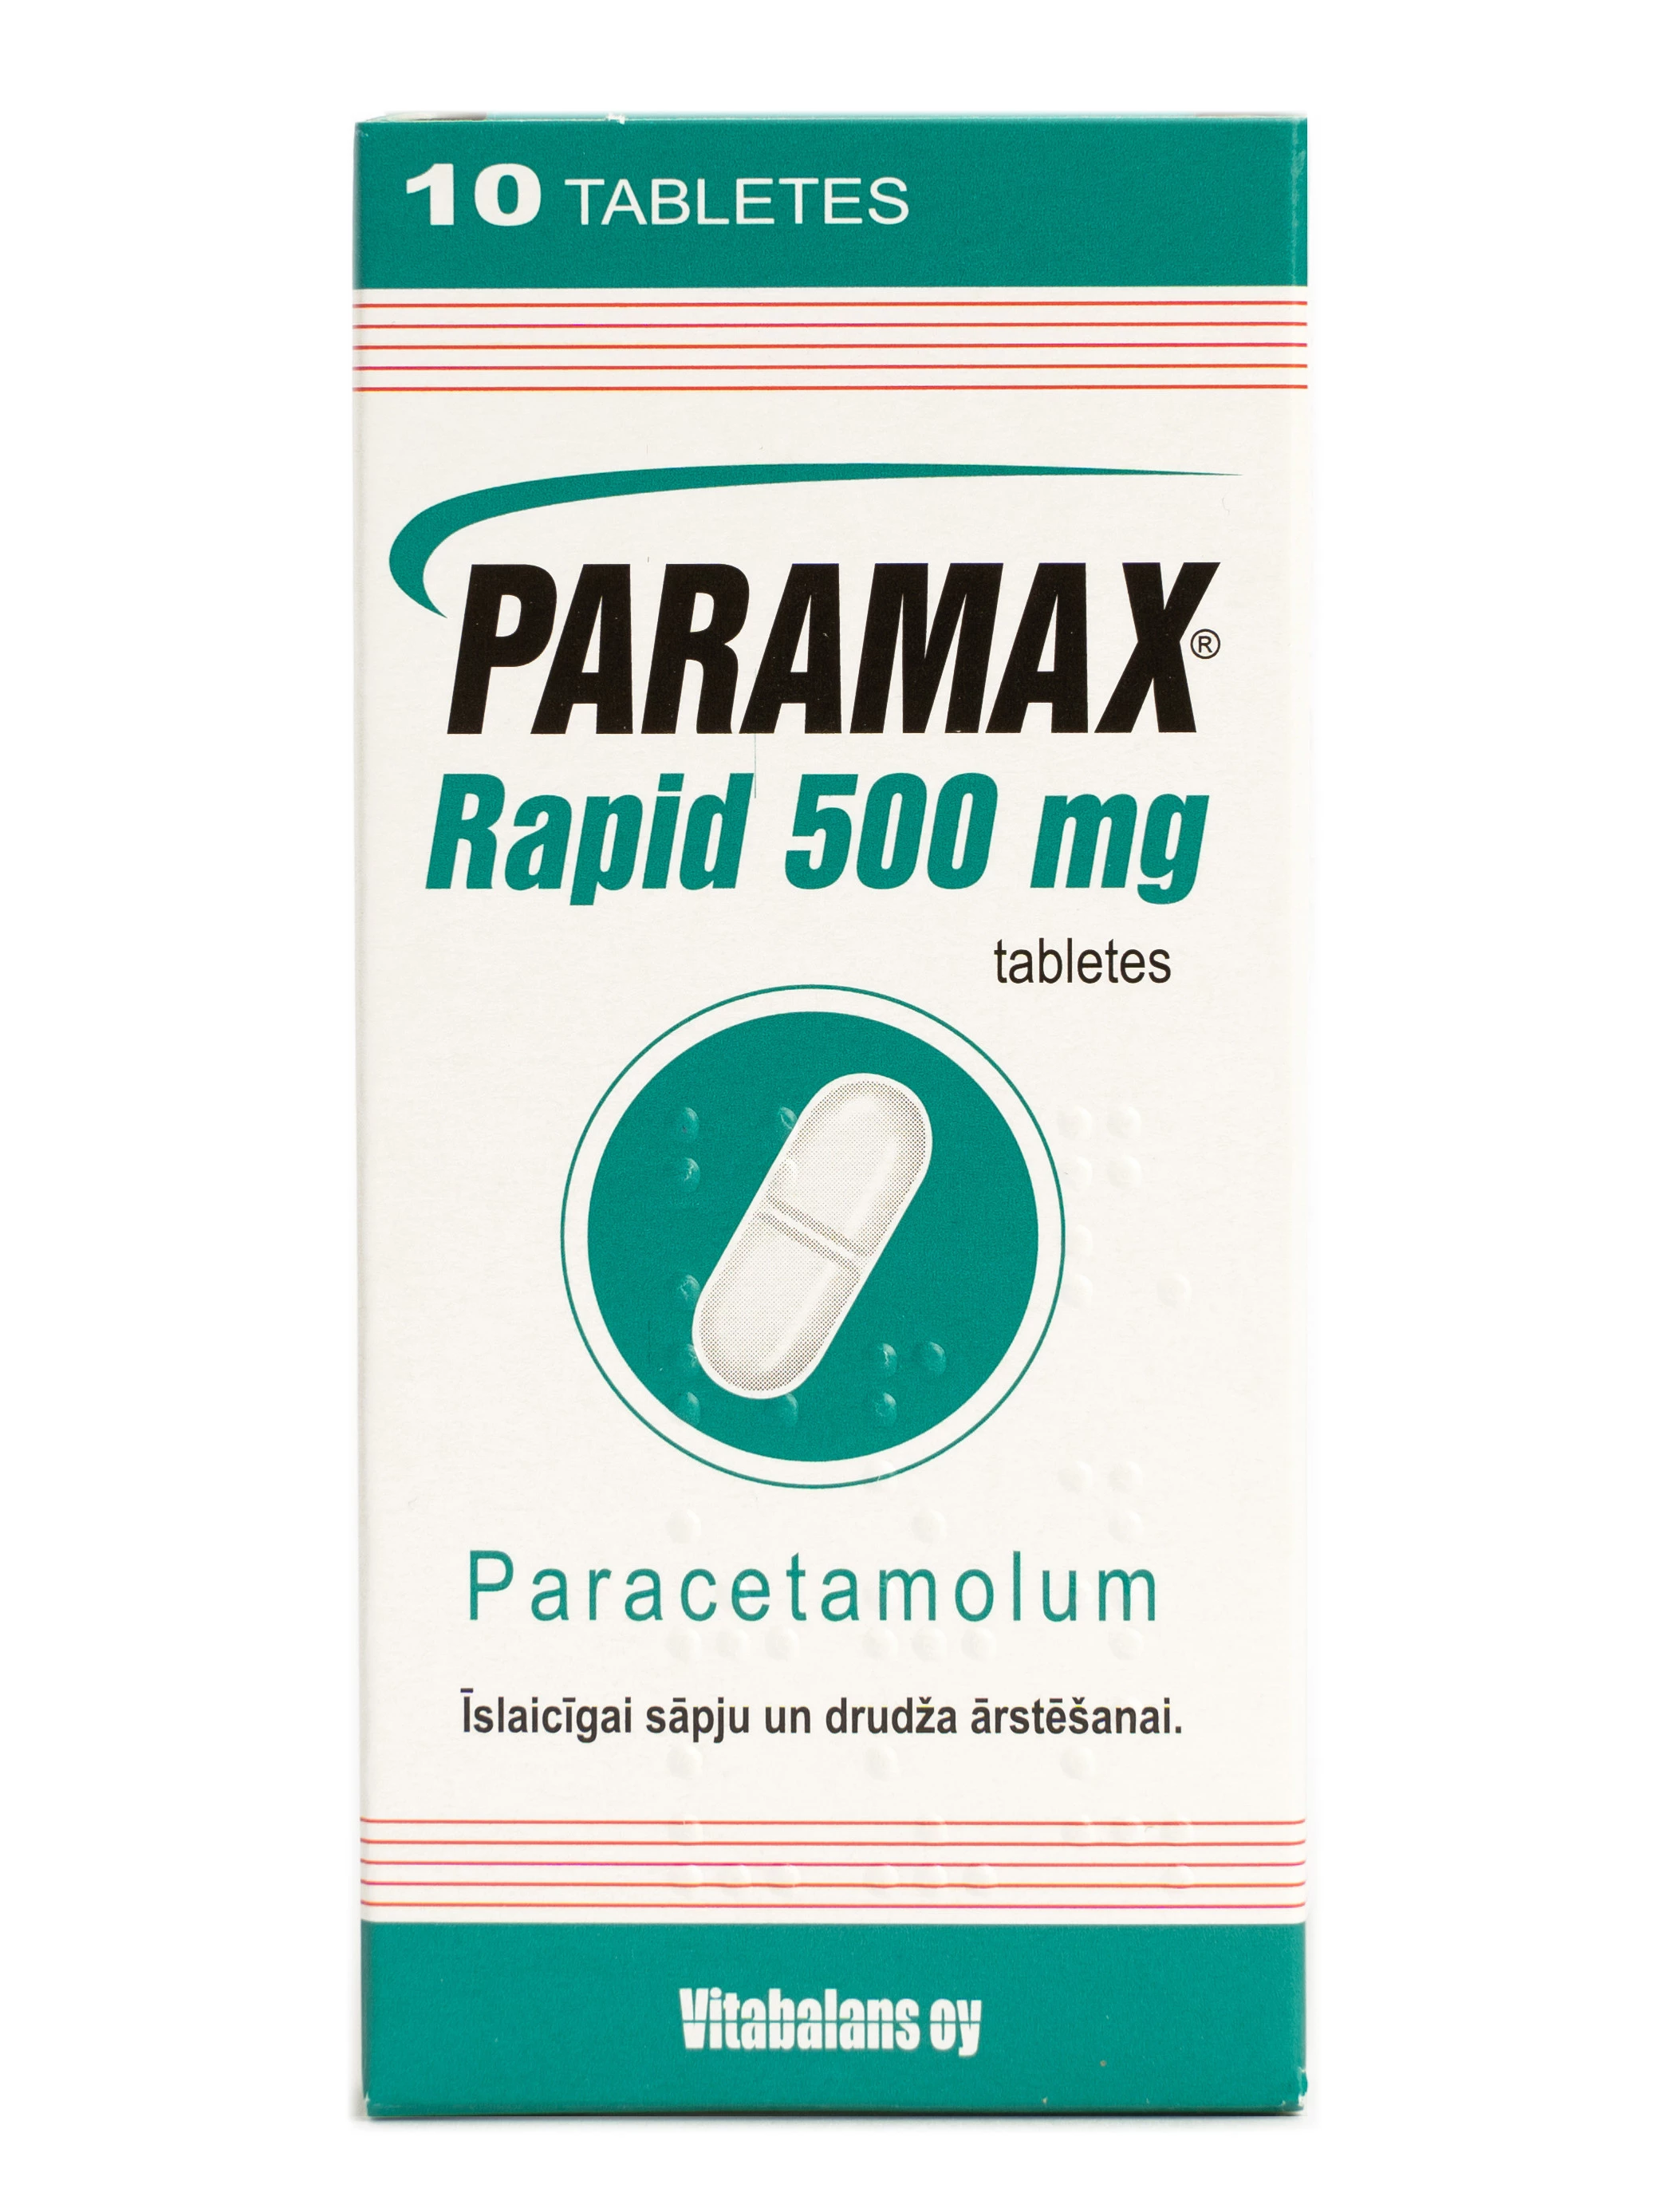 Парамакс афиша на сегодня. Парамакс лекарство. Парацетамол от боли и жара. Парамакс свечи. Парамакс Рапид 500.